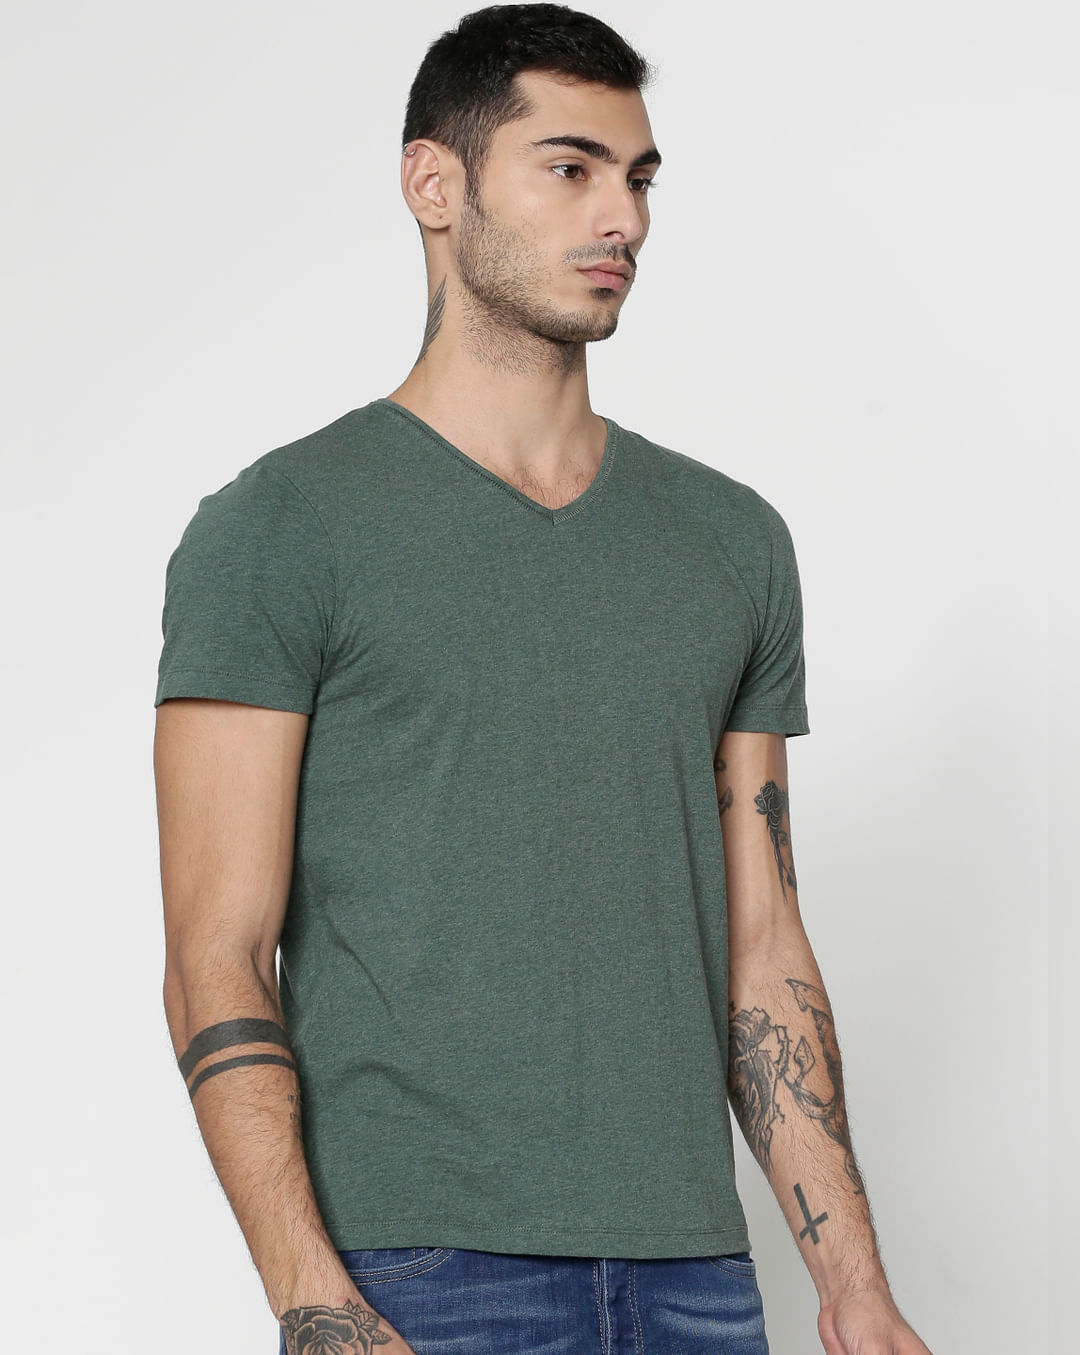 Buy Green Slim Fit V-Neck T-Shirt in - Flat 50%